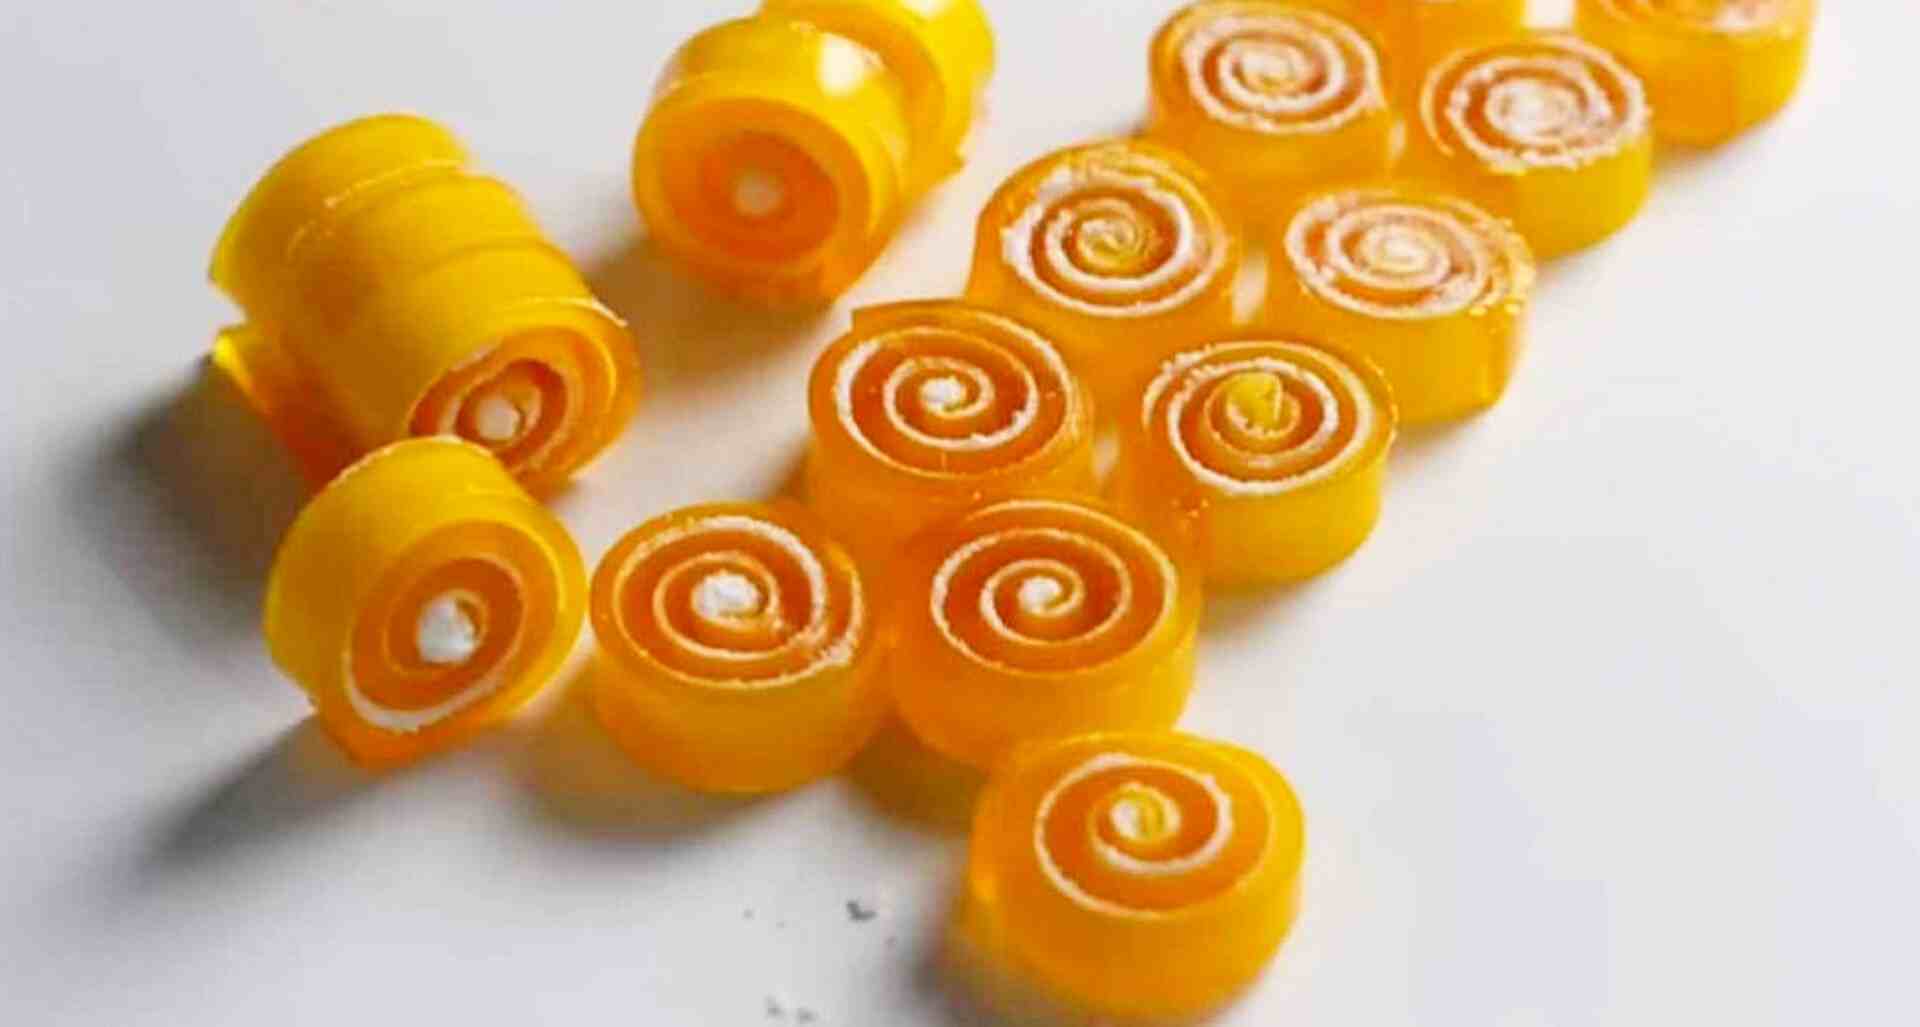 Resep alami permen jeli jeruk gulung, orang jelly roll candy